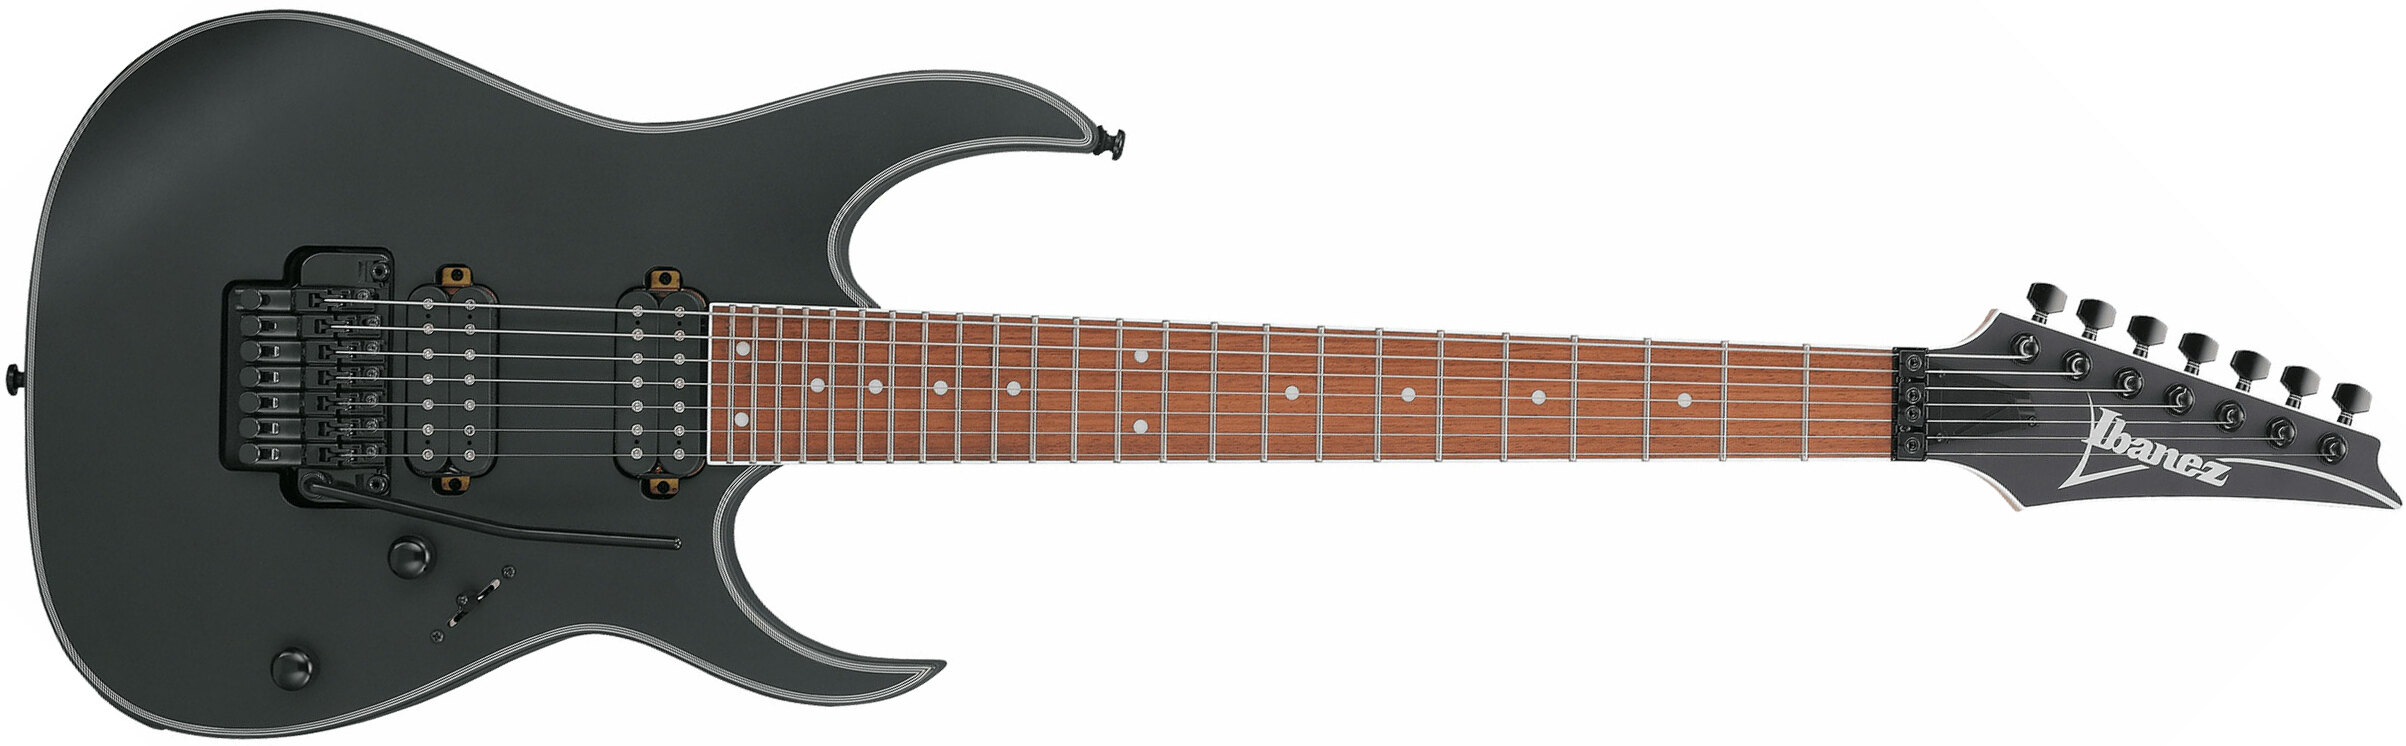 Ibanez Rg7420ex Bkf Standard 7c 2h Ht Jat - Black Flat - 7 string electric guitar - Main picture